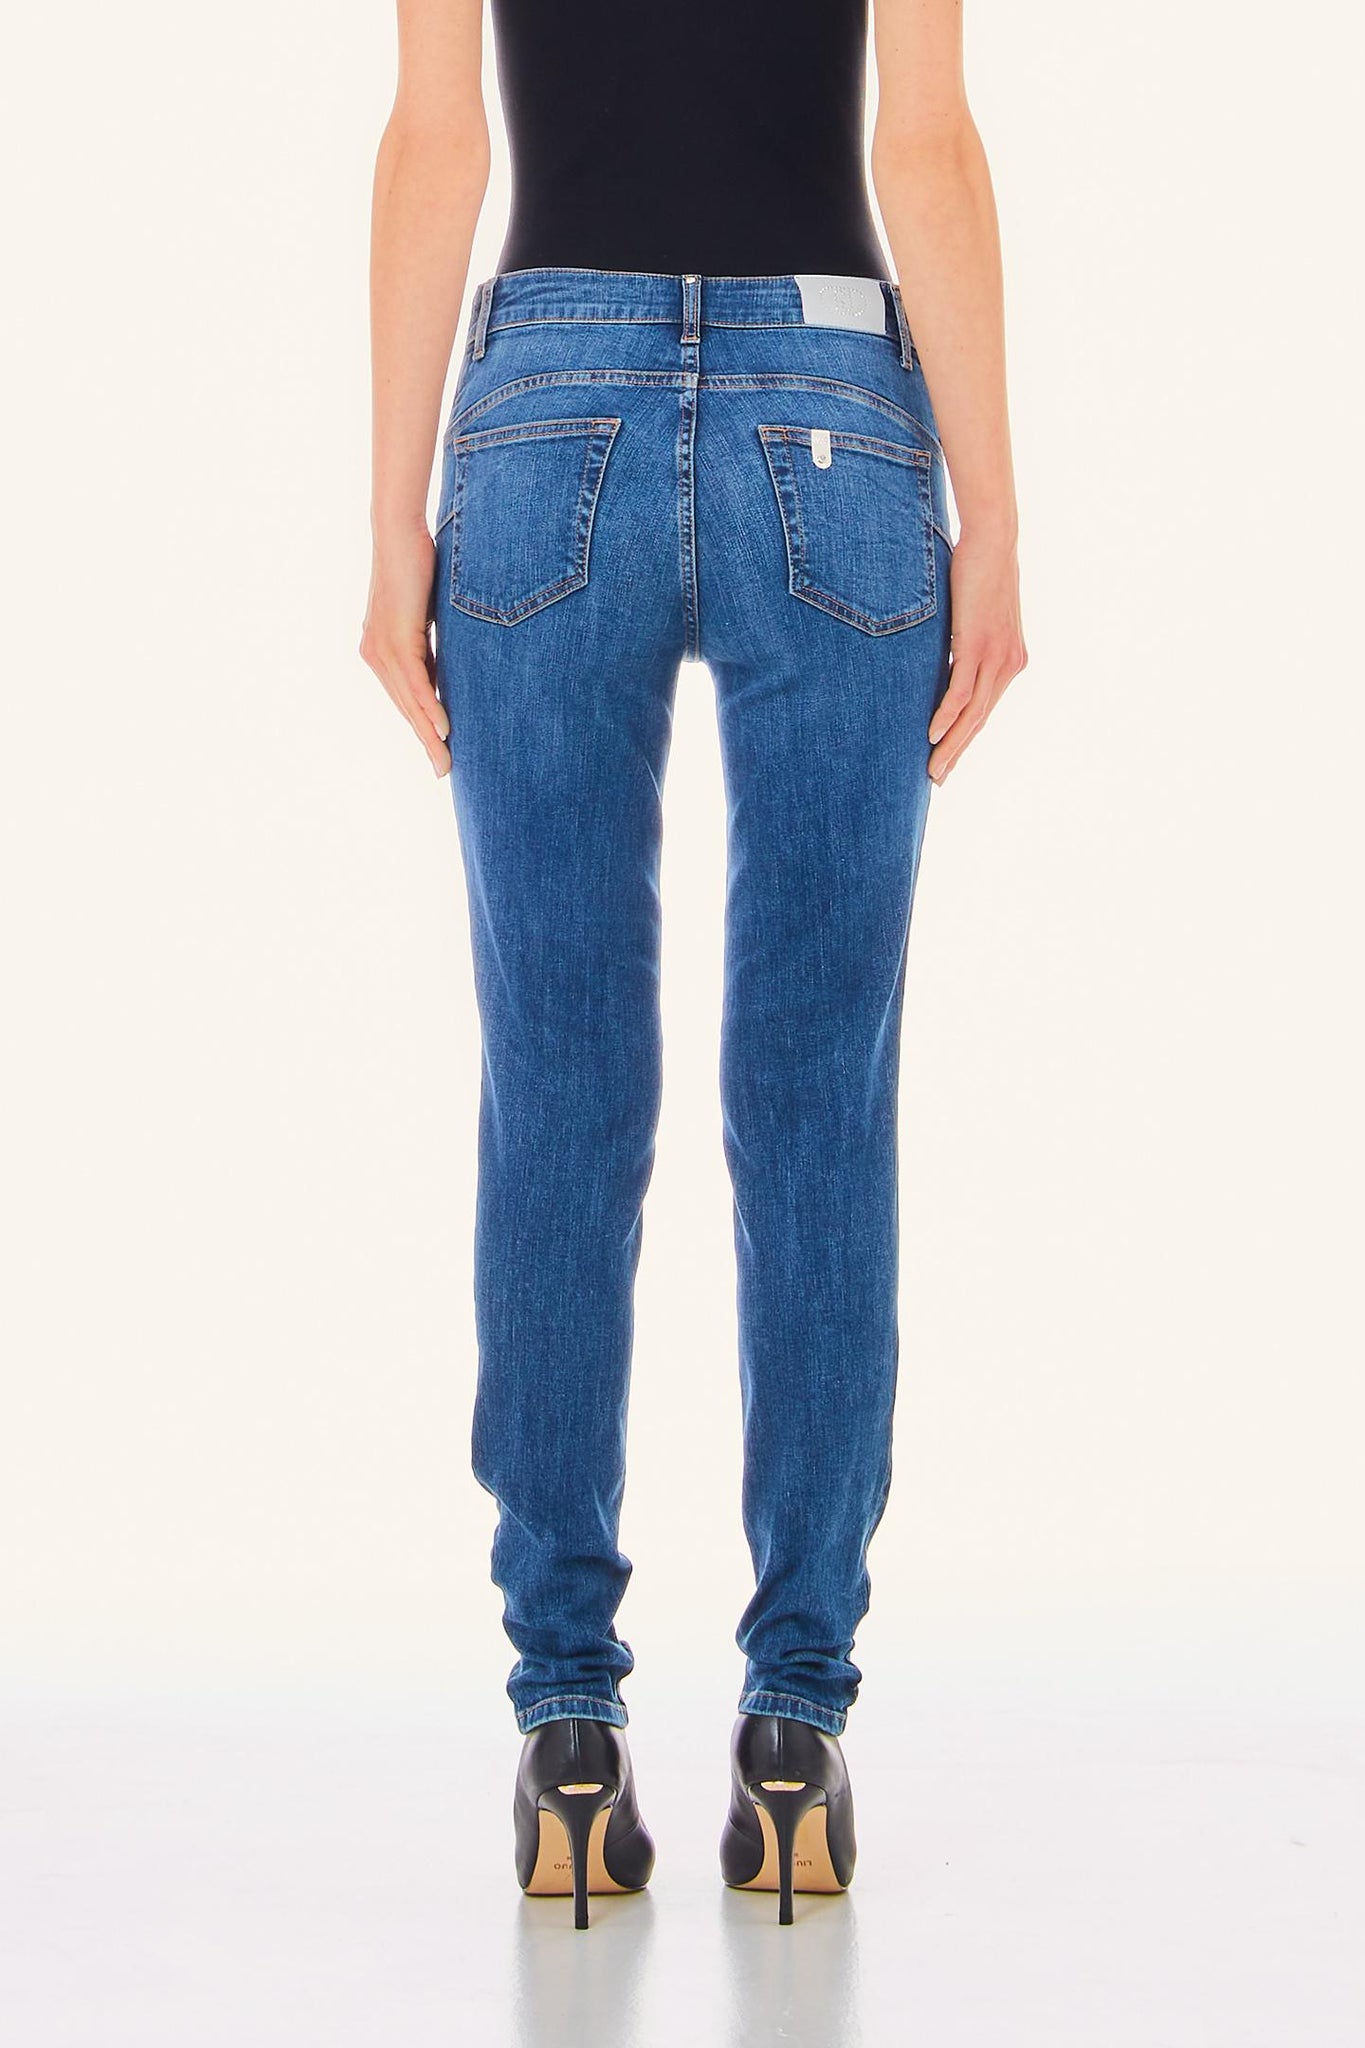 Jeans Bottom Up in Denim / Jeans - Ideal Moda